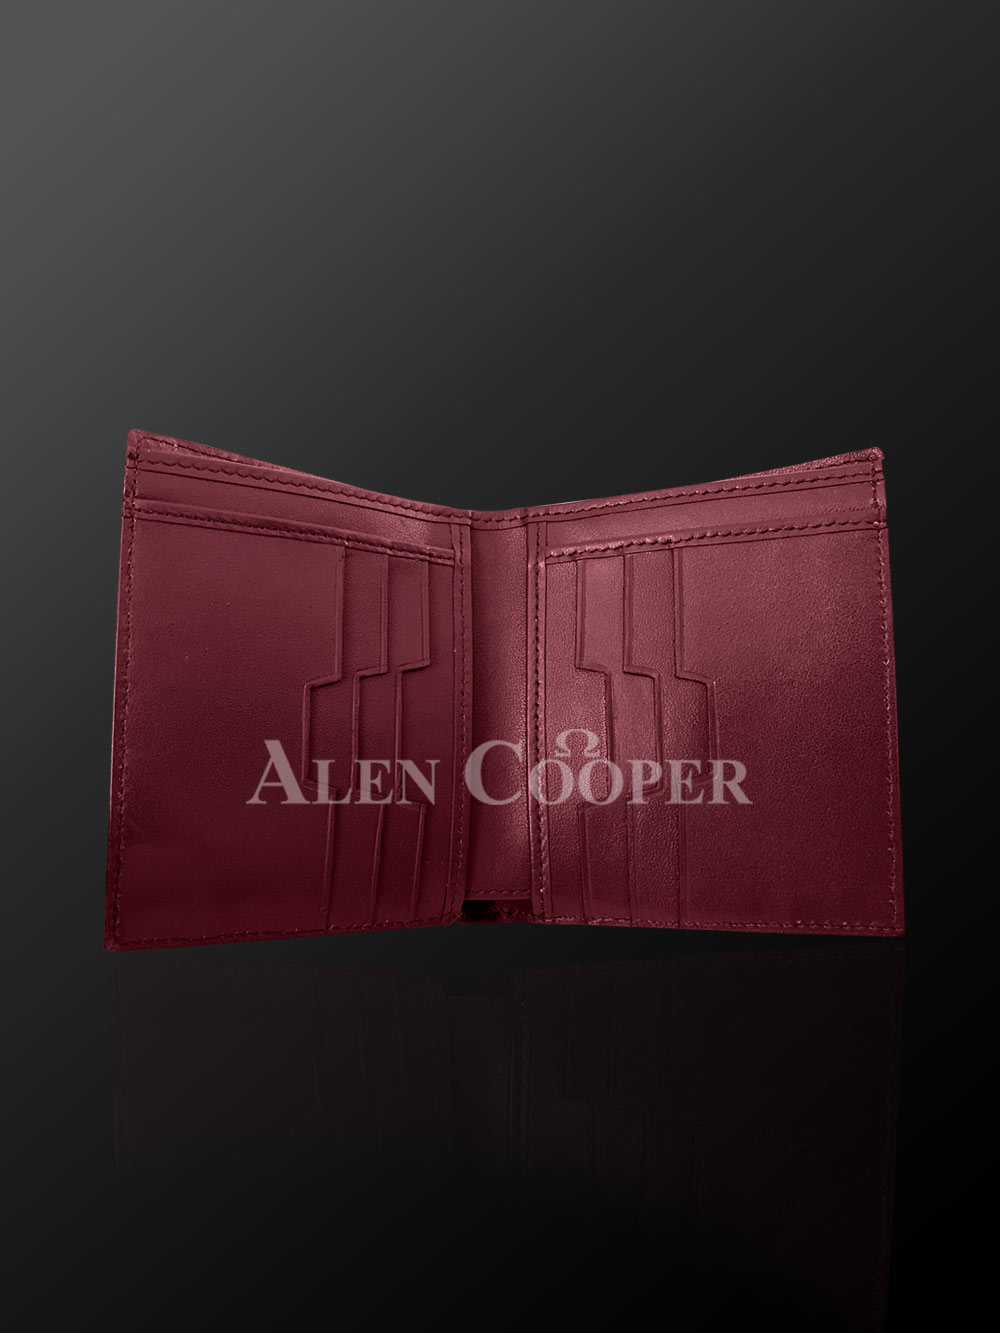 Authentic alligator skin wallet to redefine your class & taste